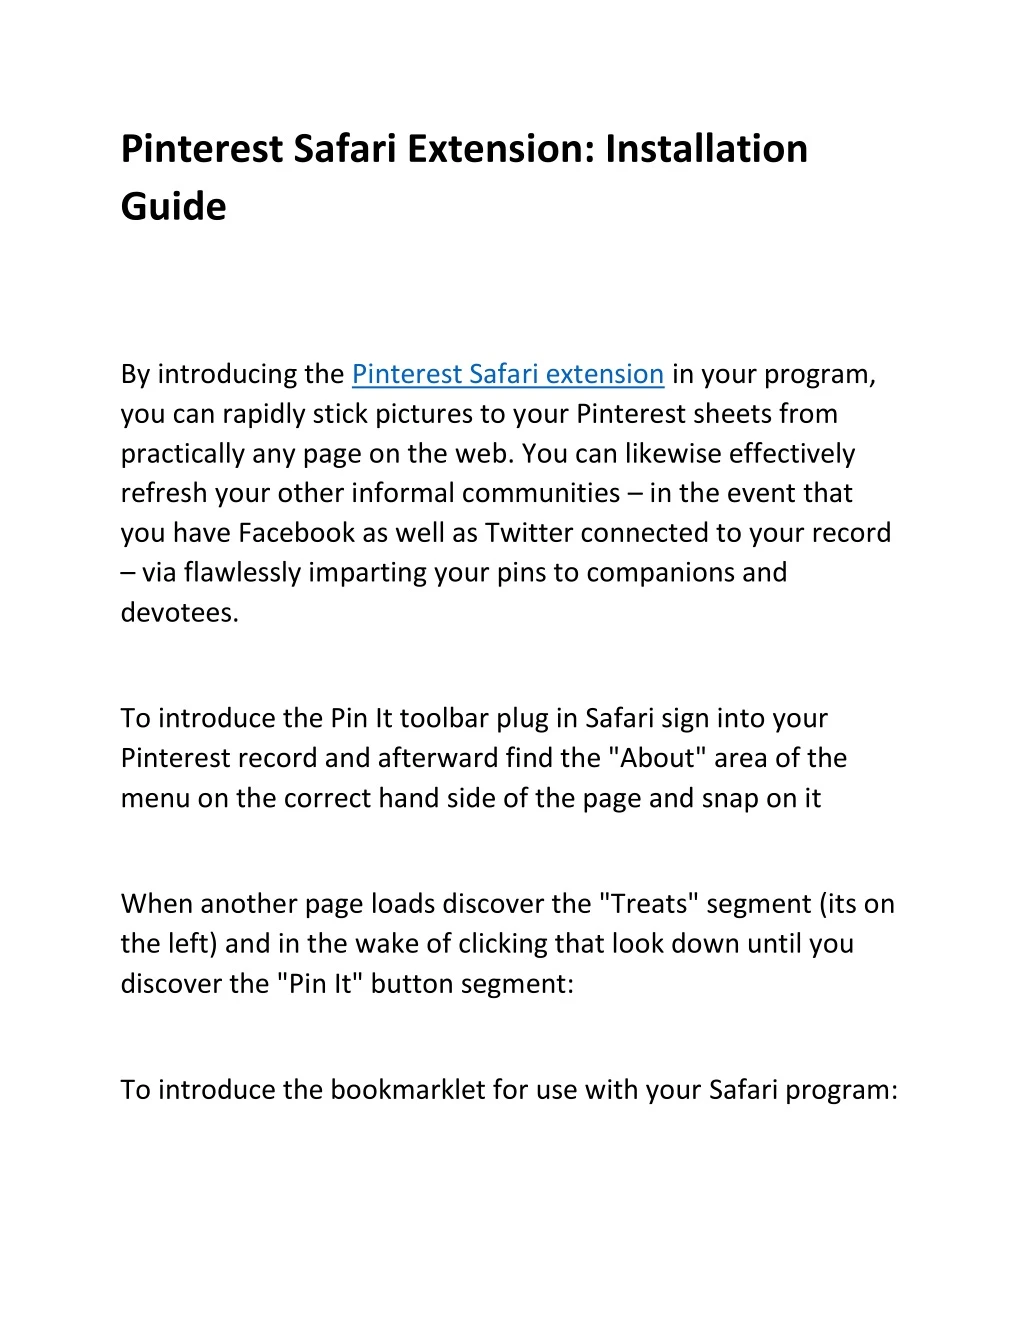 pinterest safari extension installation guide